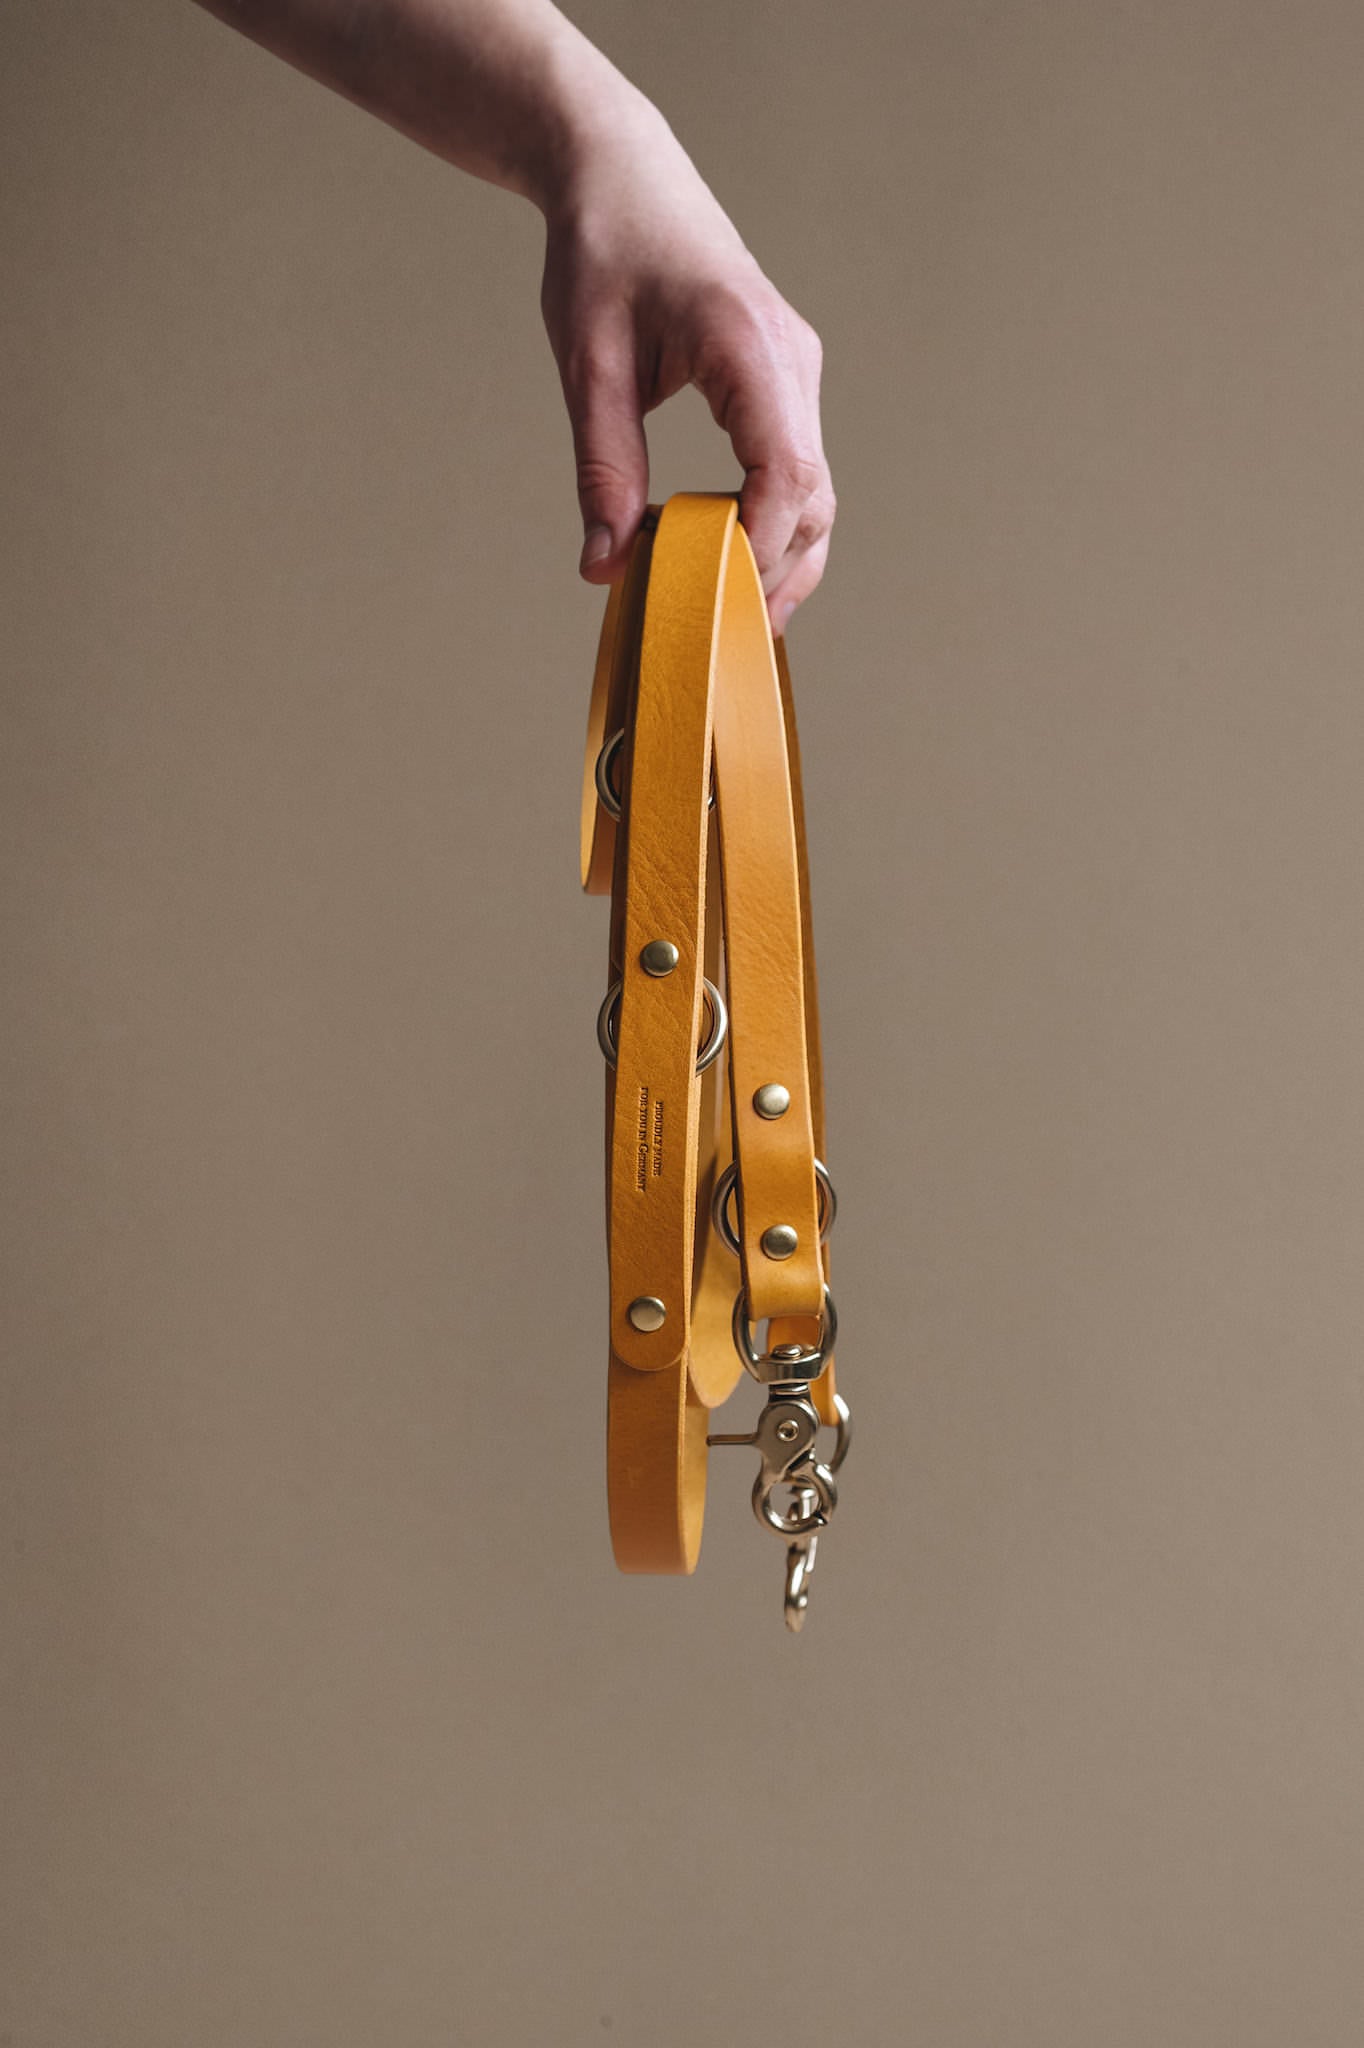 Beacone Wide Purse Strap Adjustable Canvas Replacement Crossbody Handbag  Shoulder Bag Strap (A-Beige) : Arts, Crafts & Sewing 